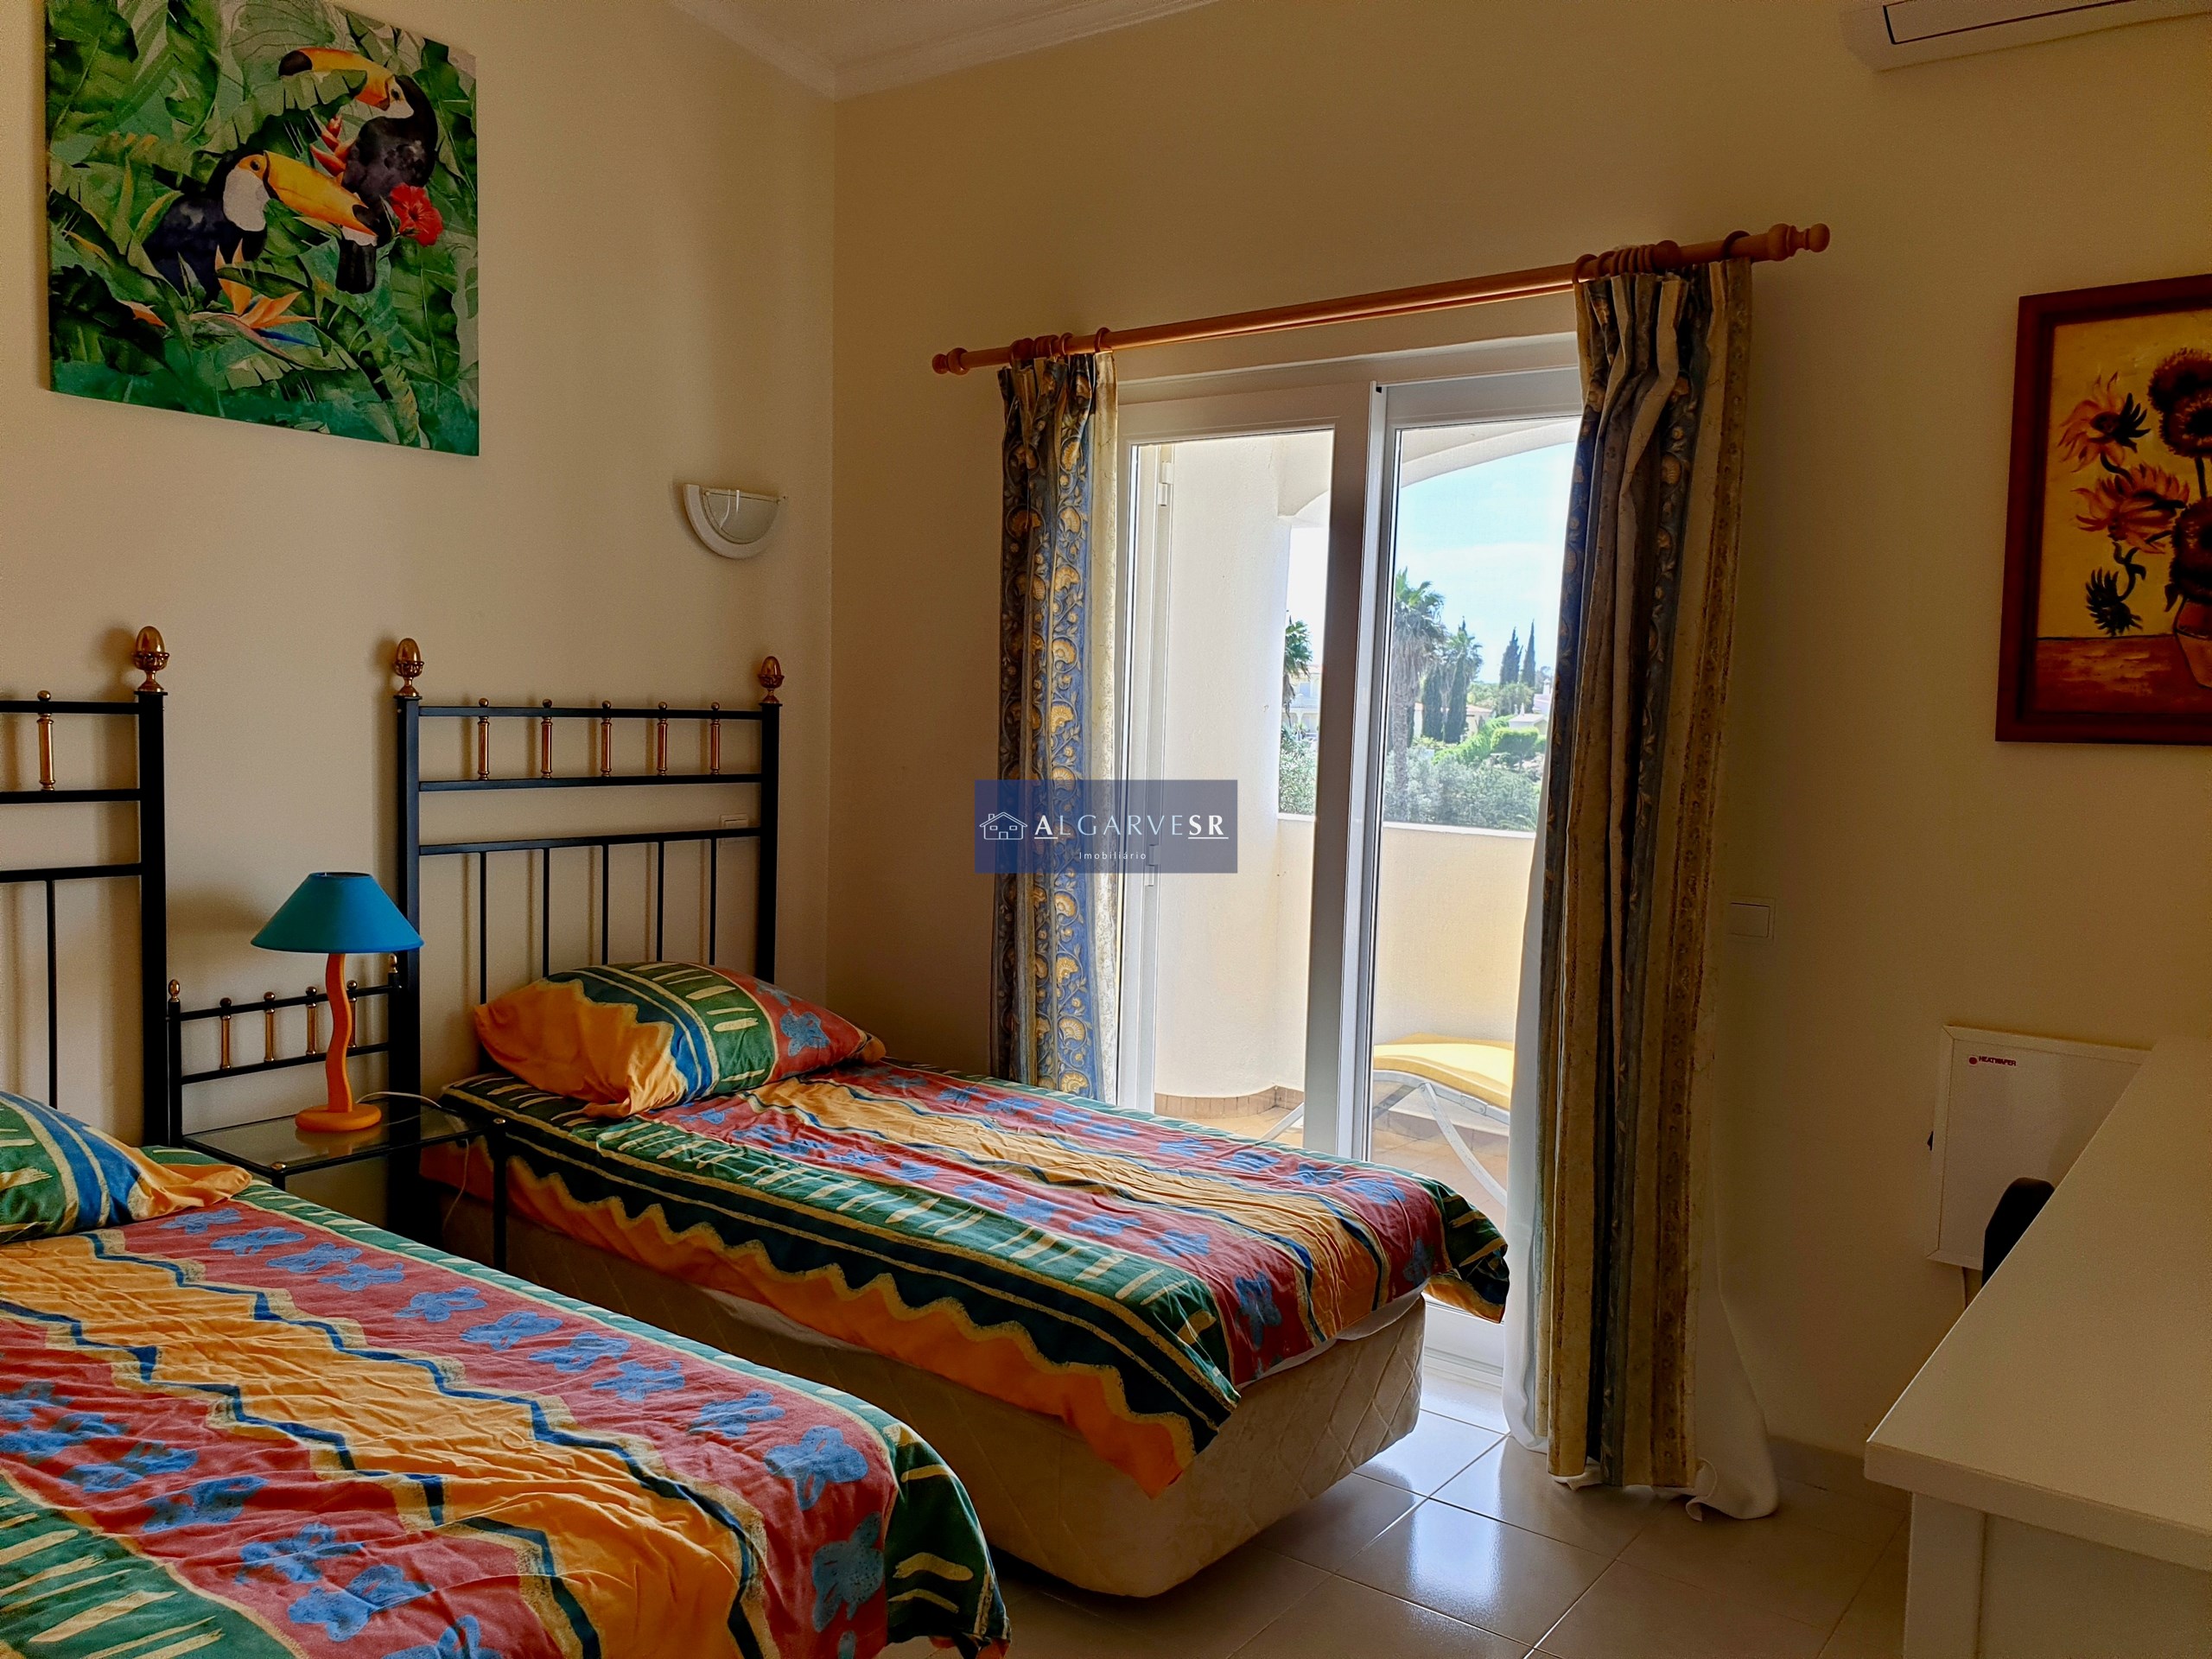 Carvoeiro, Golfemar, Two Bedroom Apartment, Golf and Sea Views